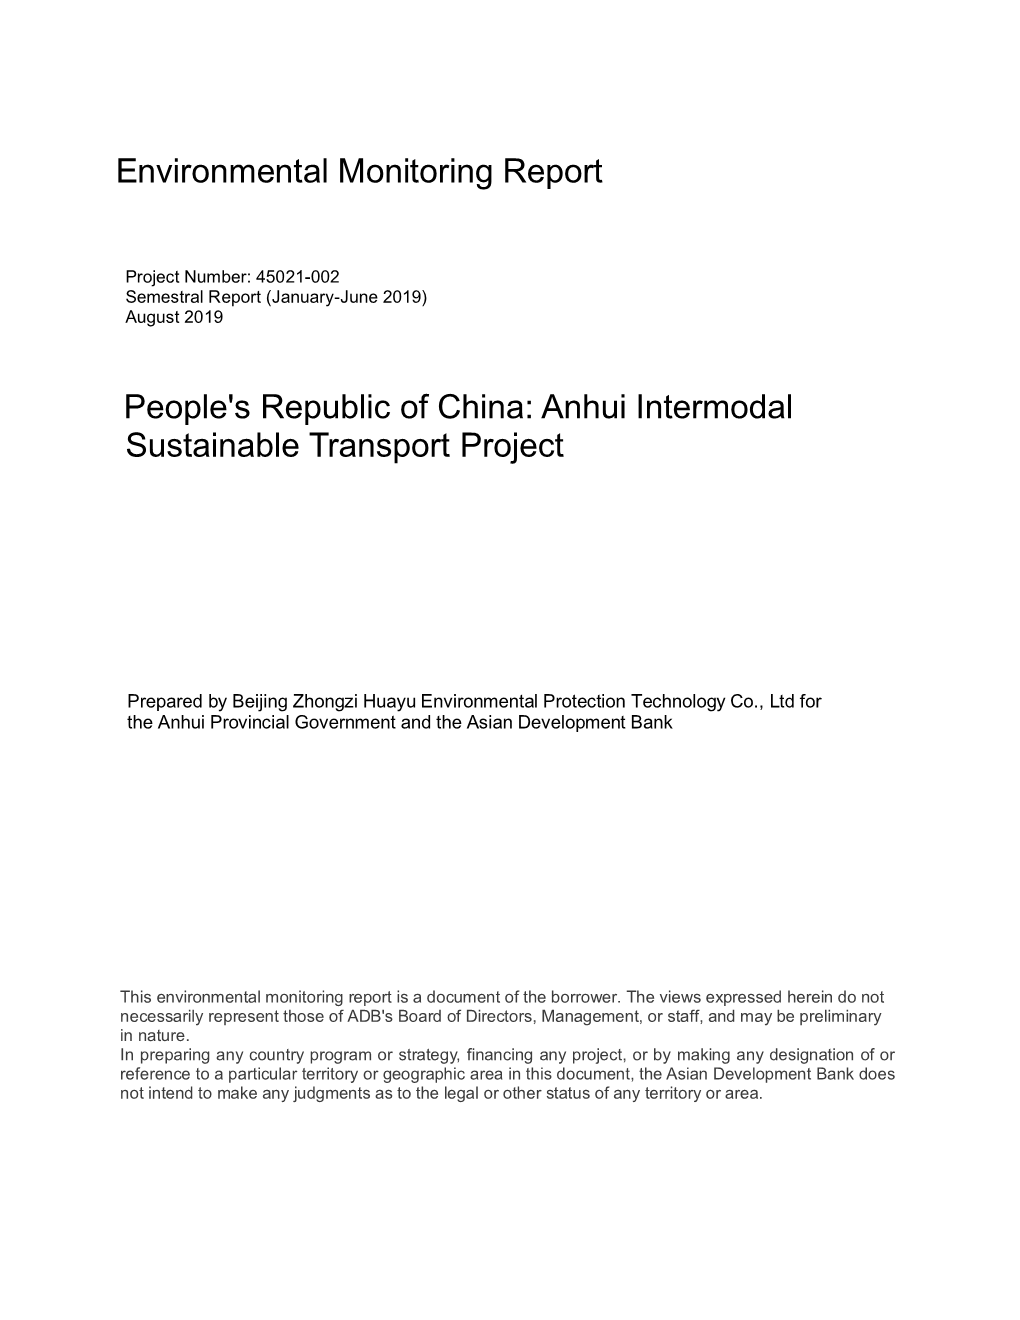 Environmental Monitoring Report People's Republic of China: Anhui